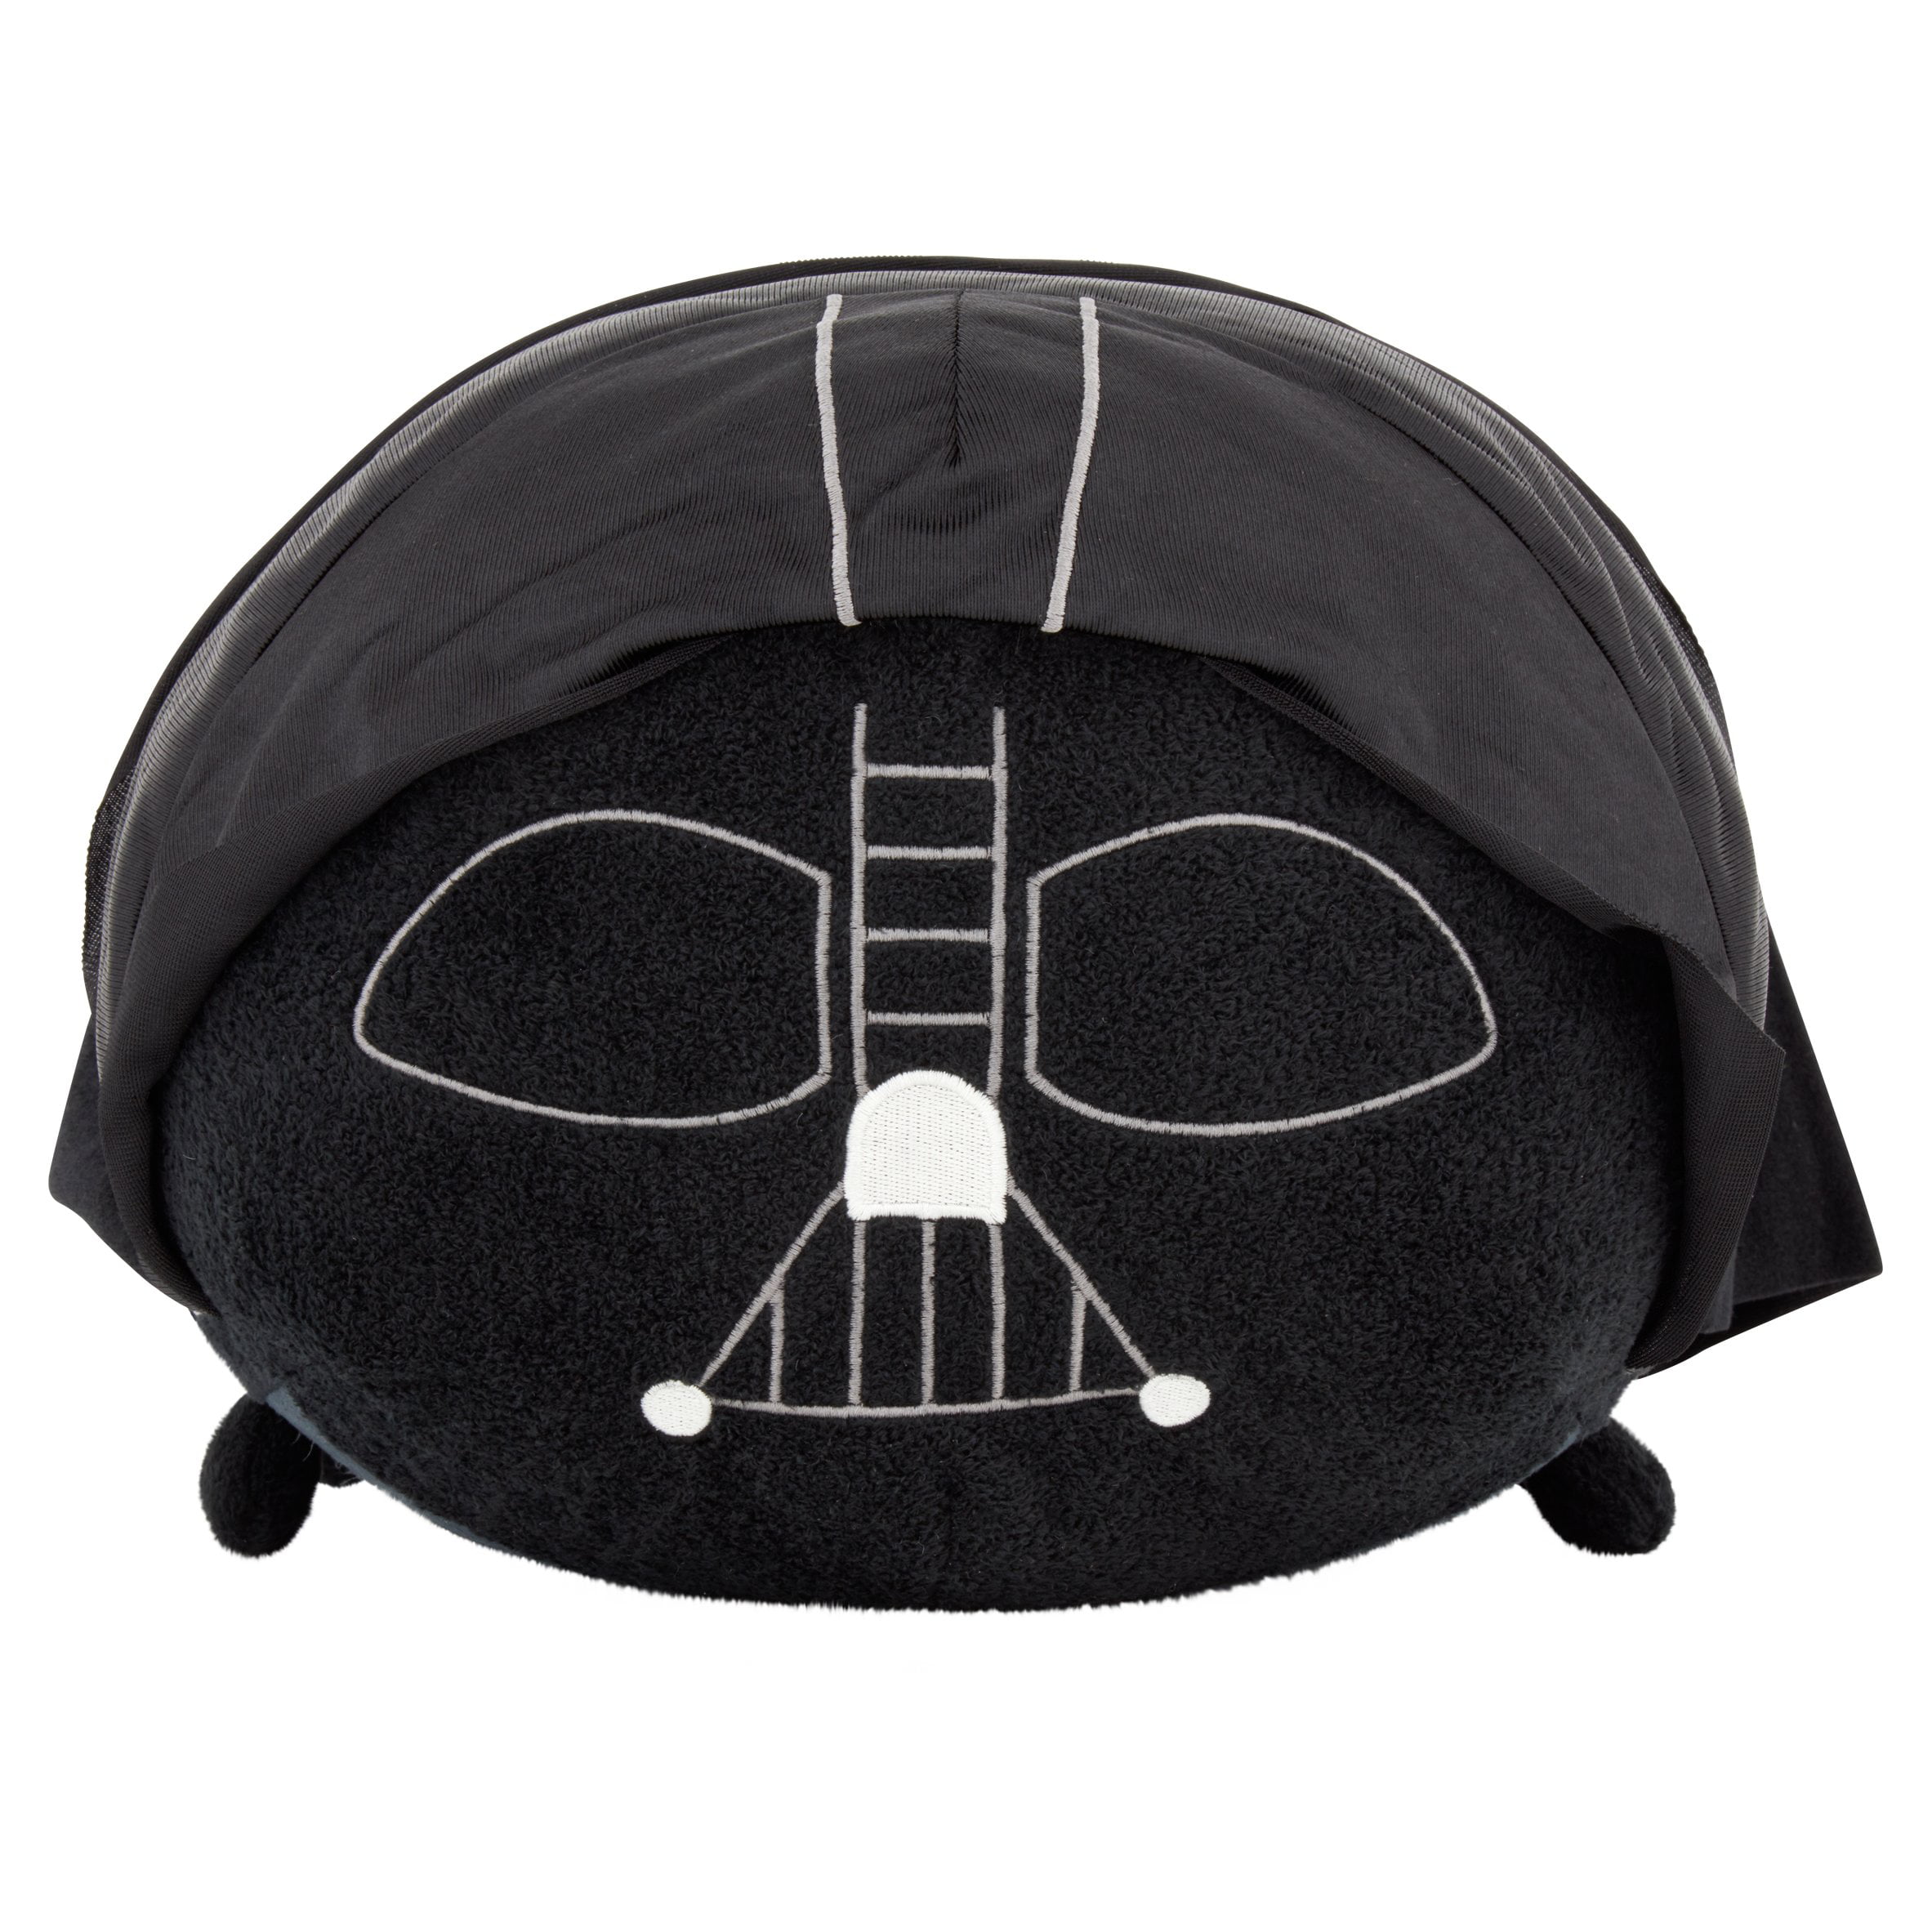 Disney Store Darth Vader Tsum Tsum Plush Star Wars Medium 12" Stuffed Toy NWT 11 